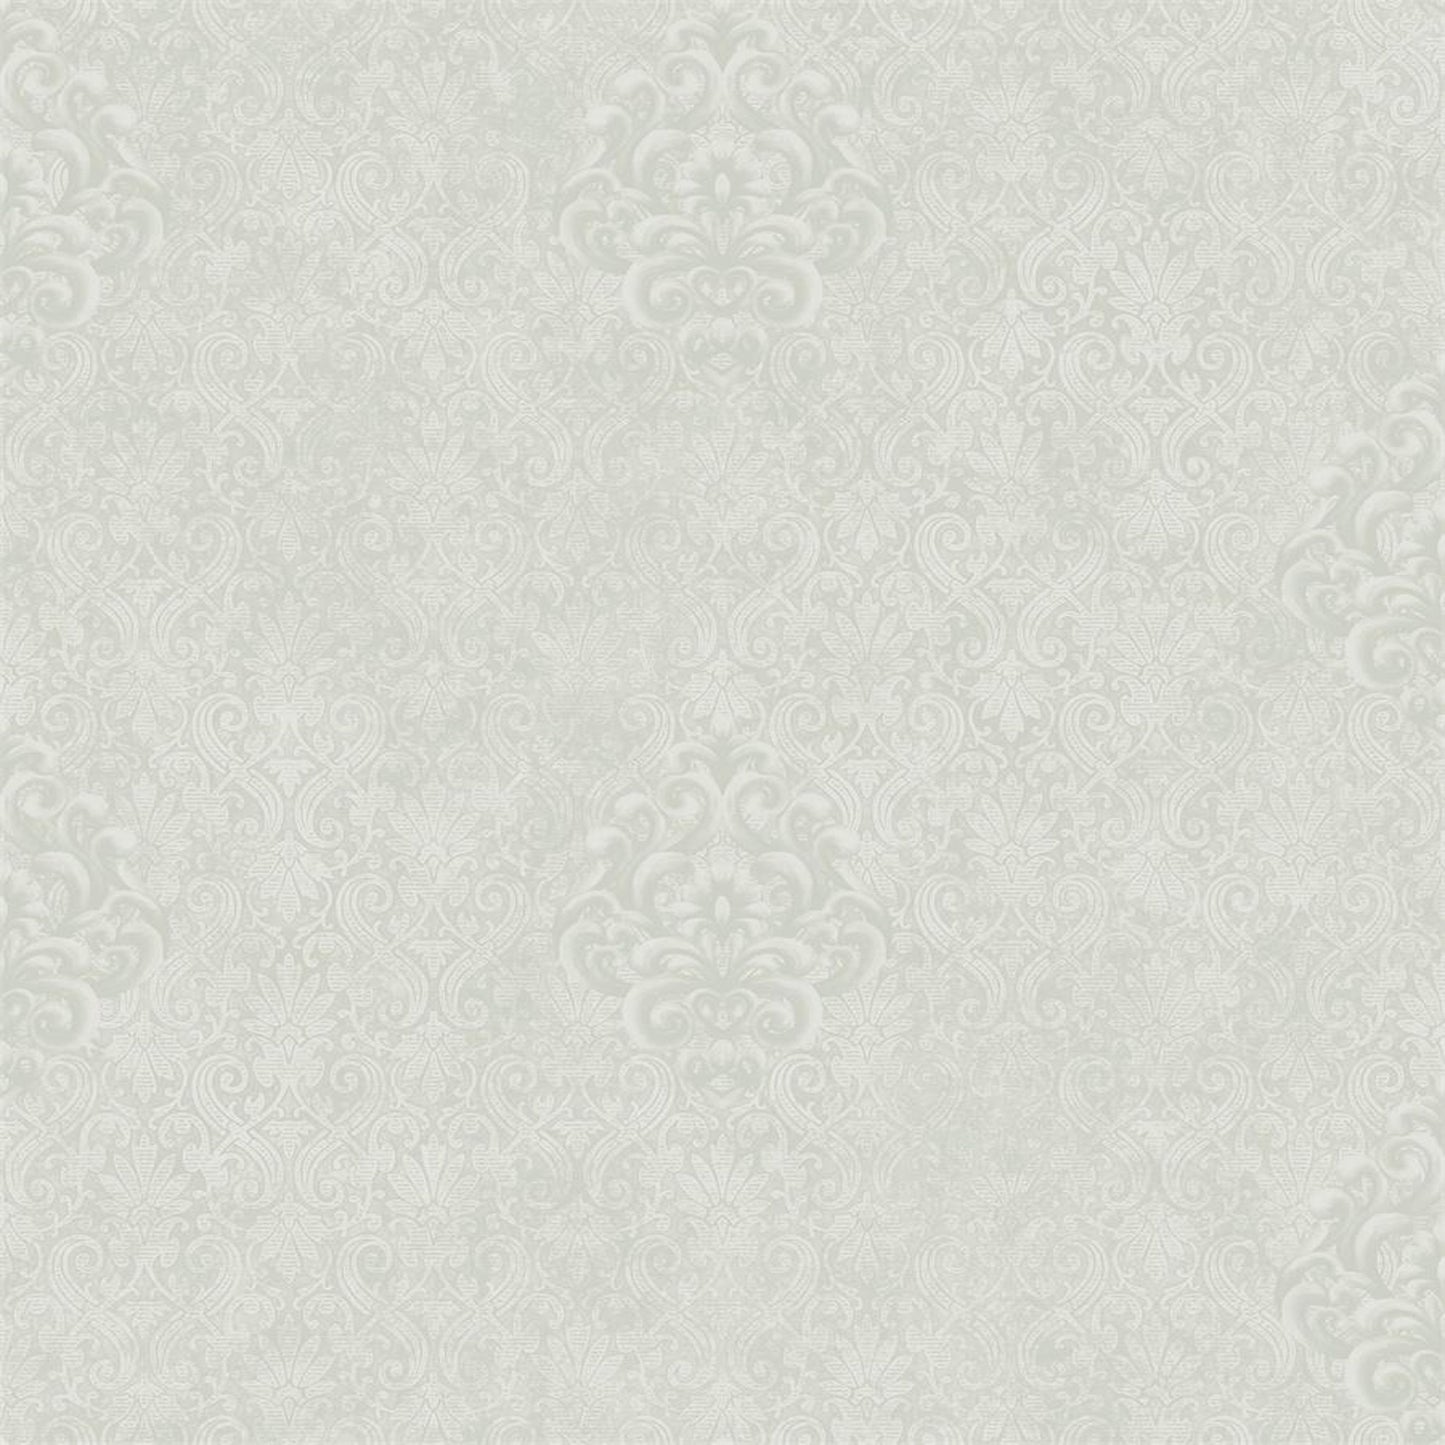 Enchanting Grey Victorian Wallpaper Design